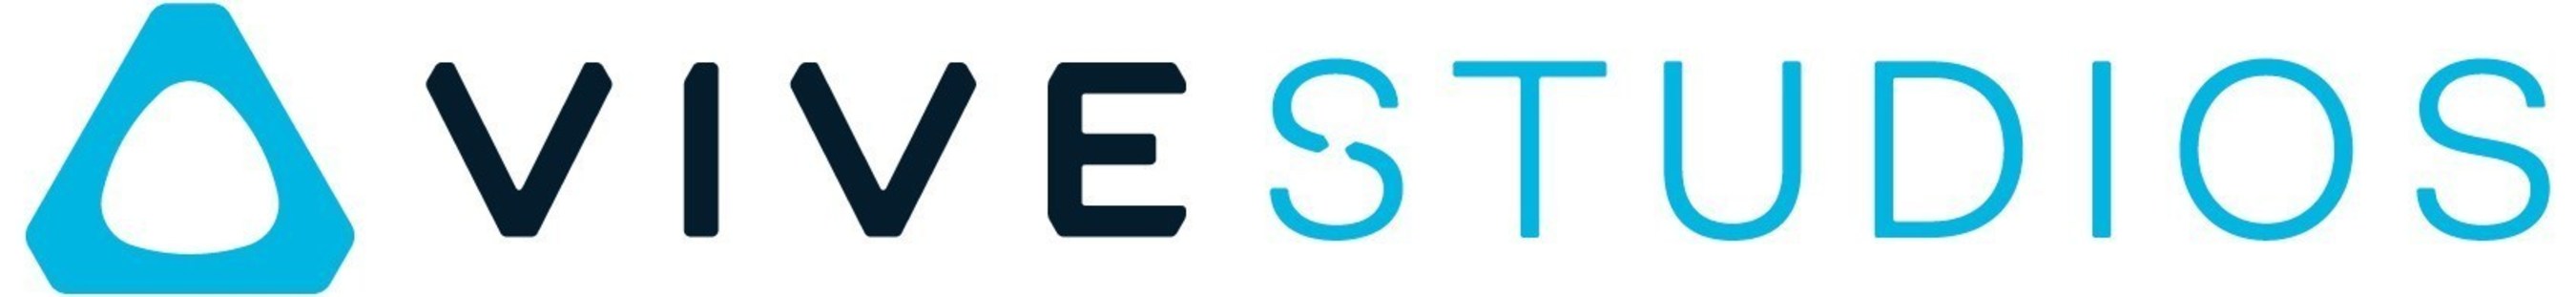 Vive Studios logo